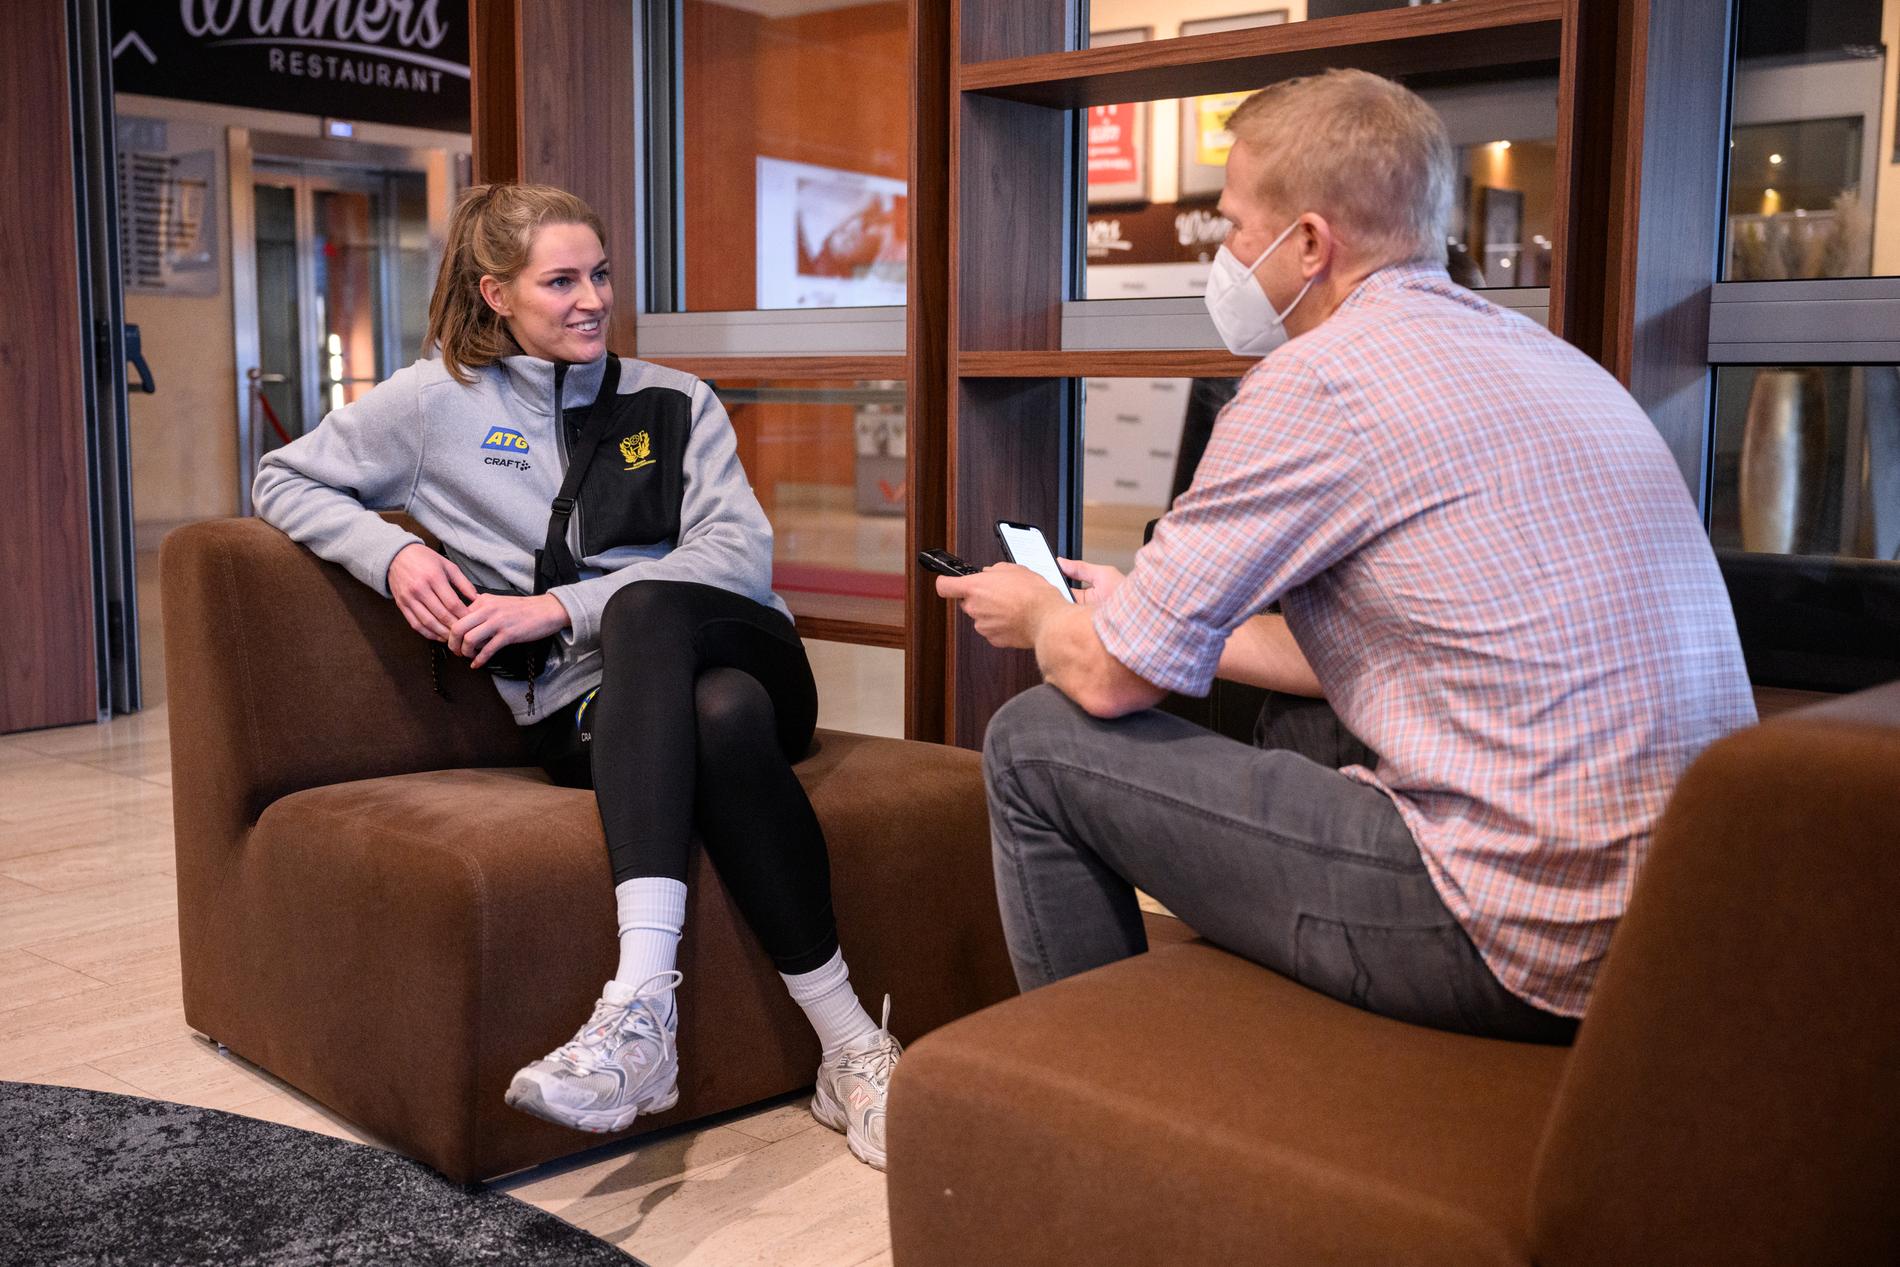 Kristin Thorleifsdóttir intervjuas av Sportbladets Johan Flinck i Ljubljana.